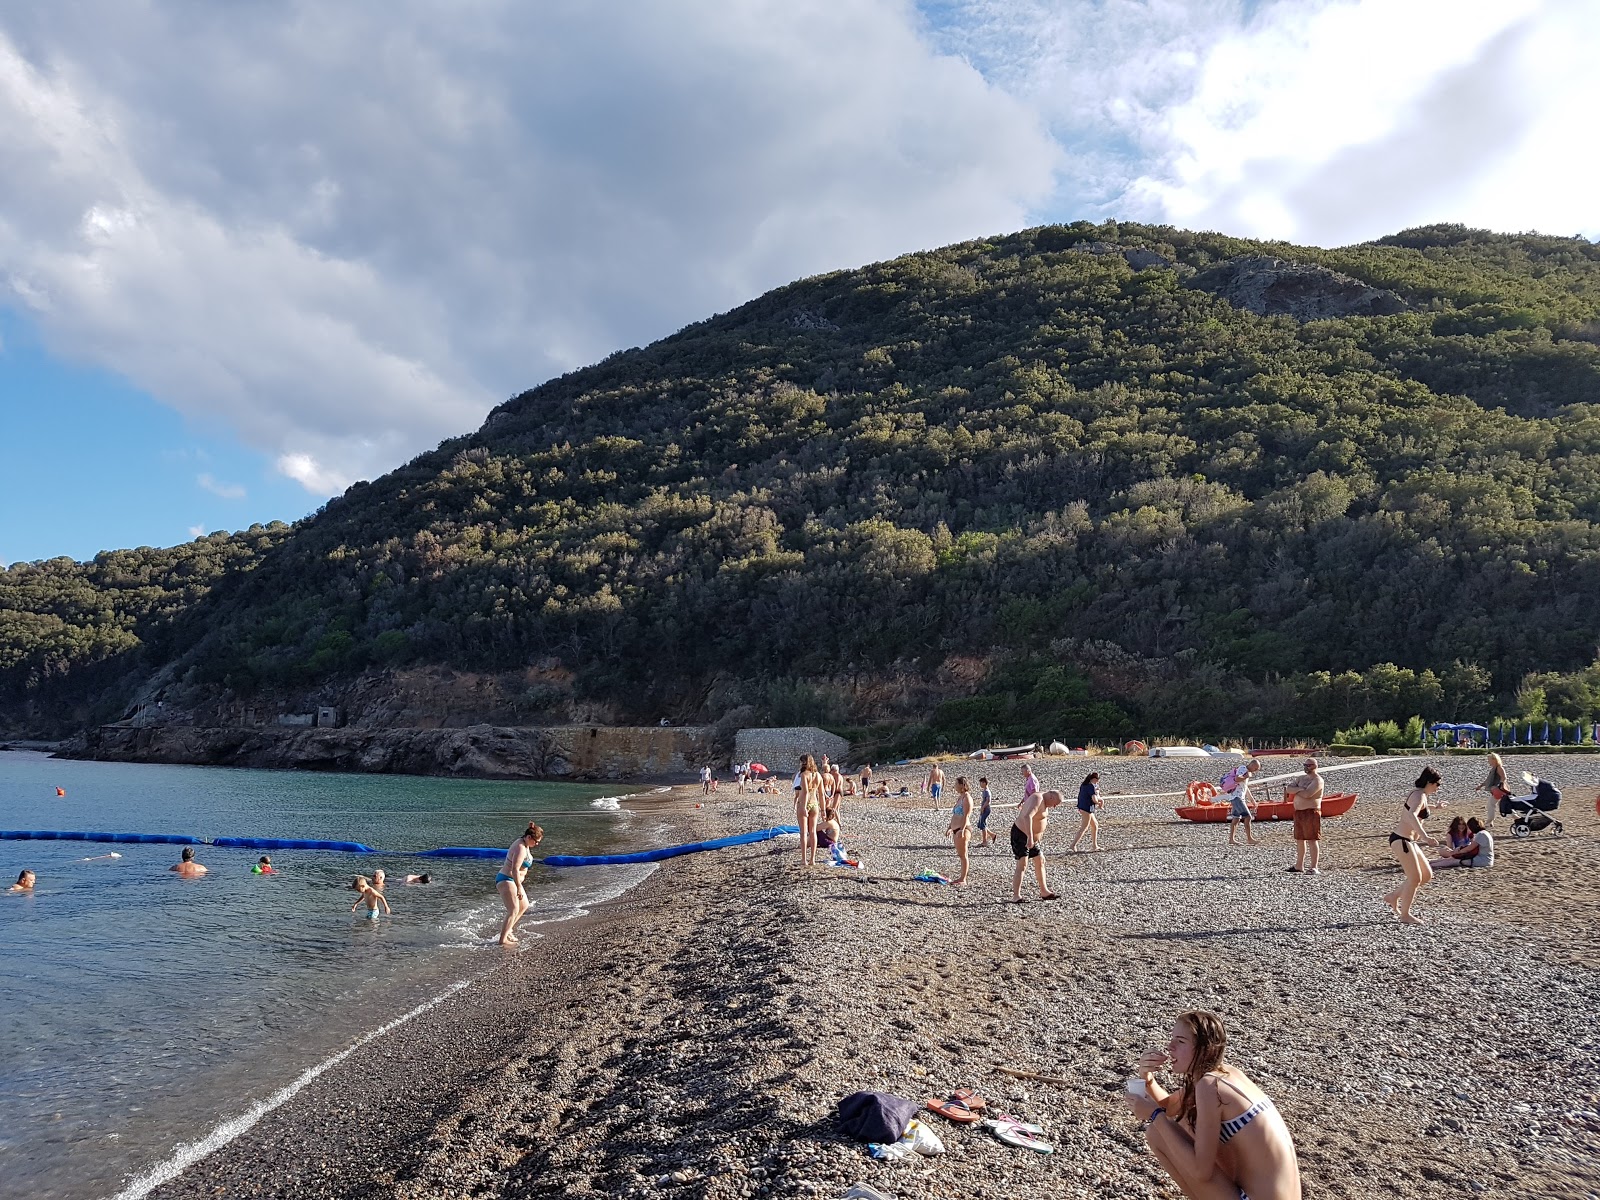 Fotografie cu Ortano beach cu nivelul de curățenie in medie